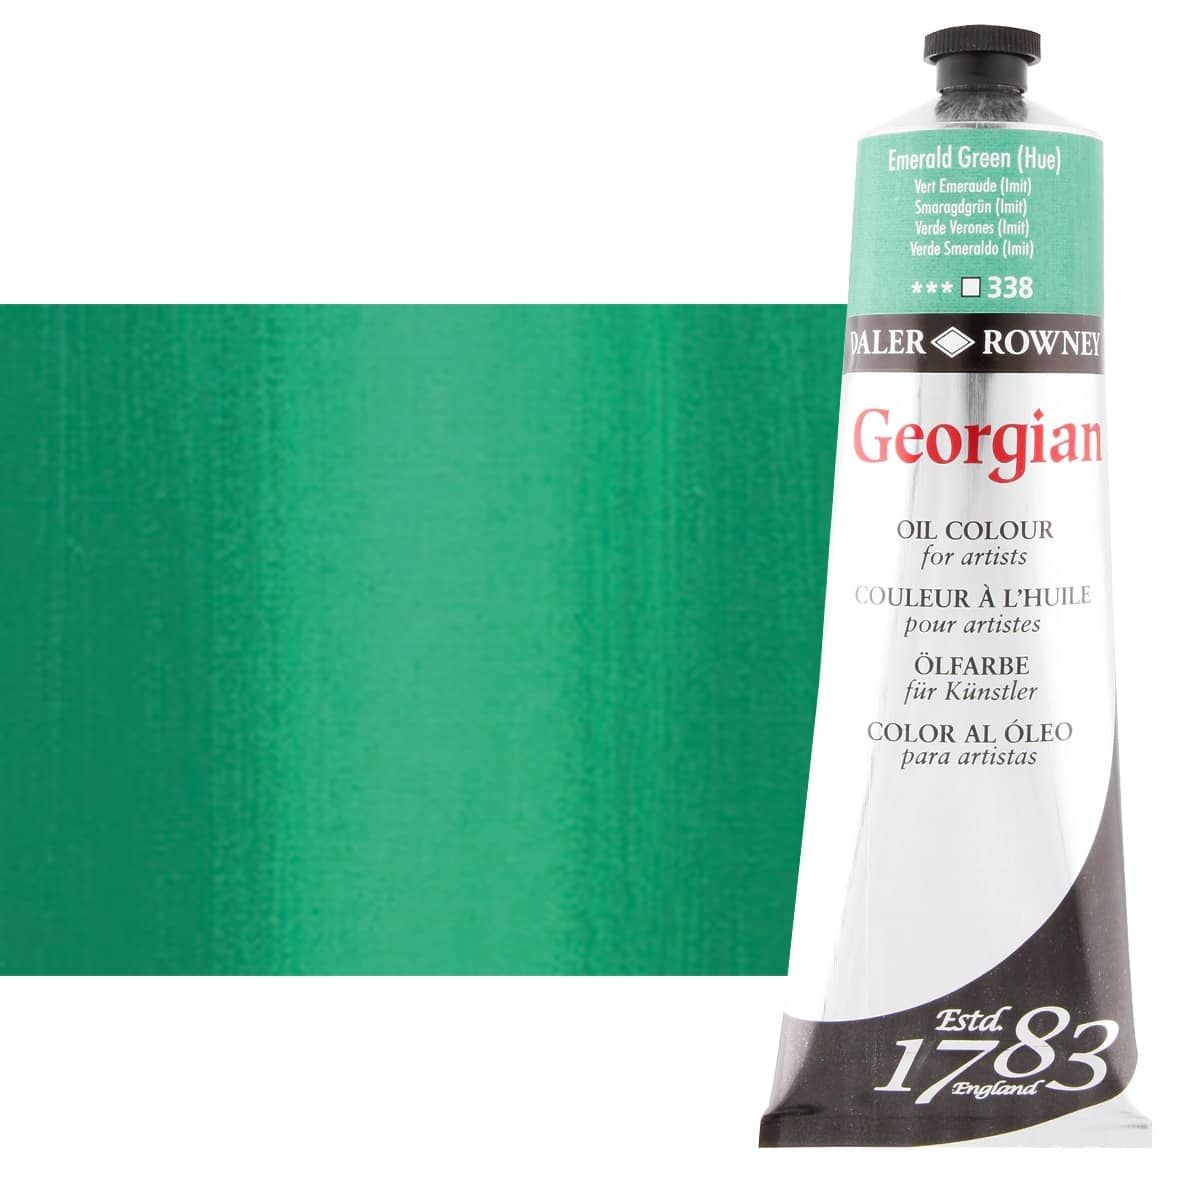 Daler-Rowney Georgian Oil Color 225ml Tube - Emerald Green Hue